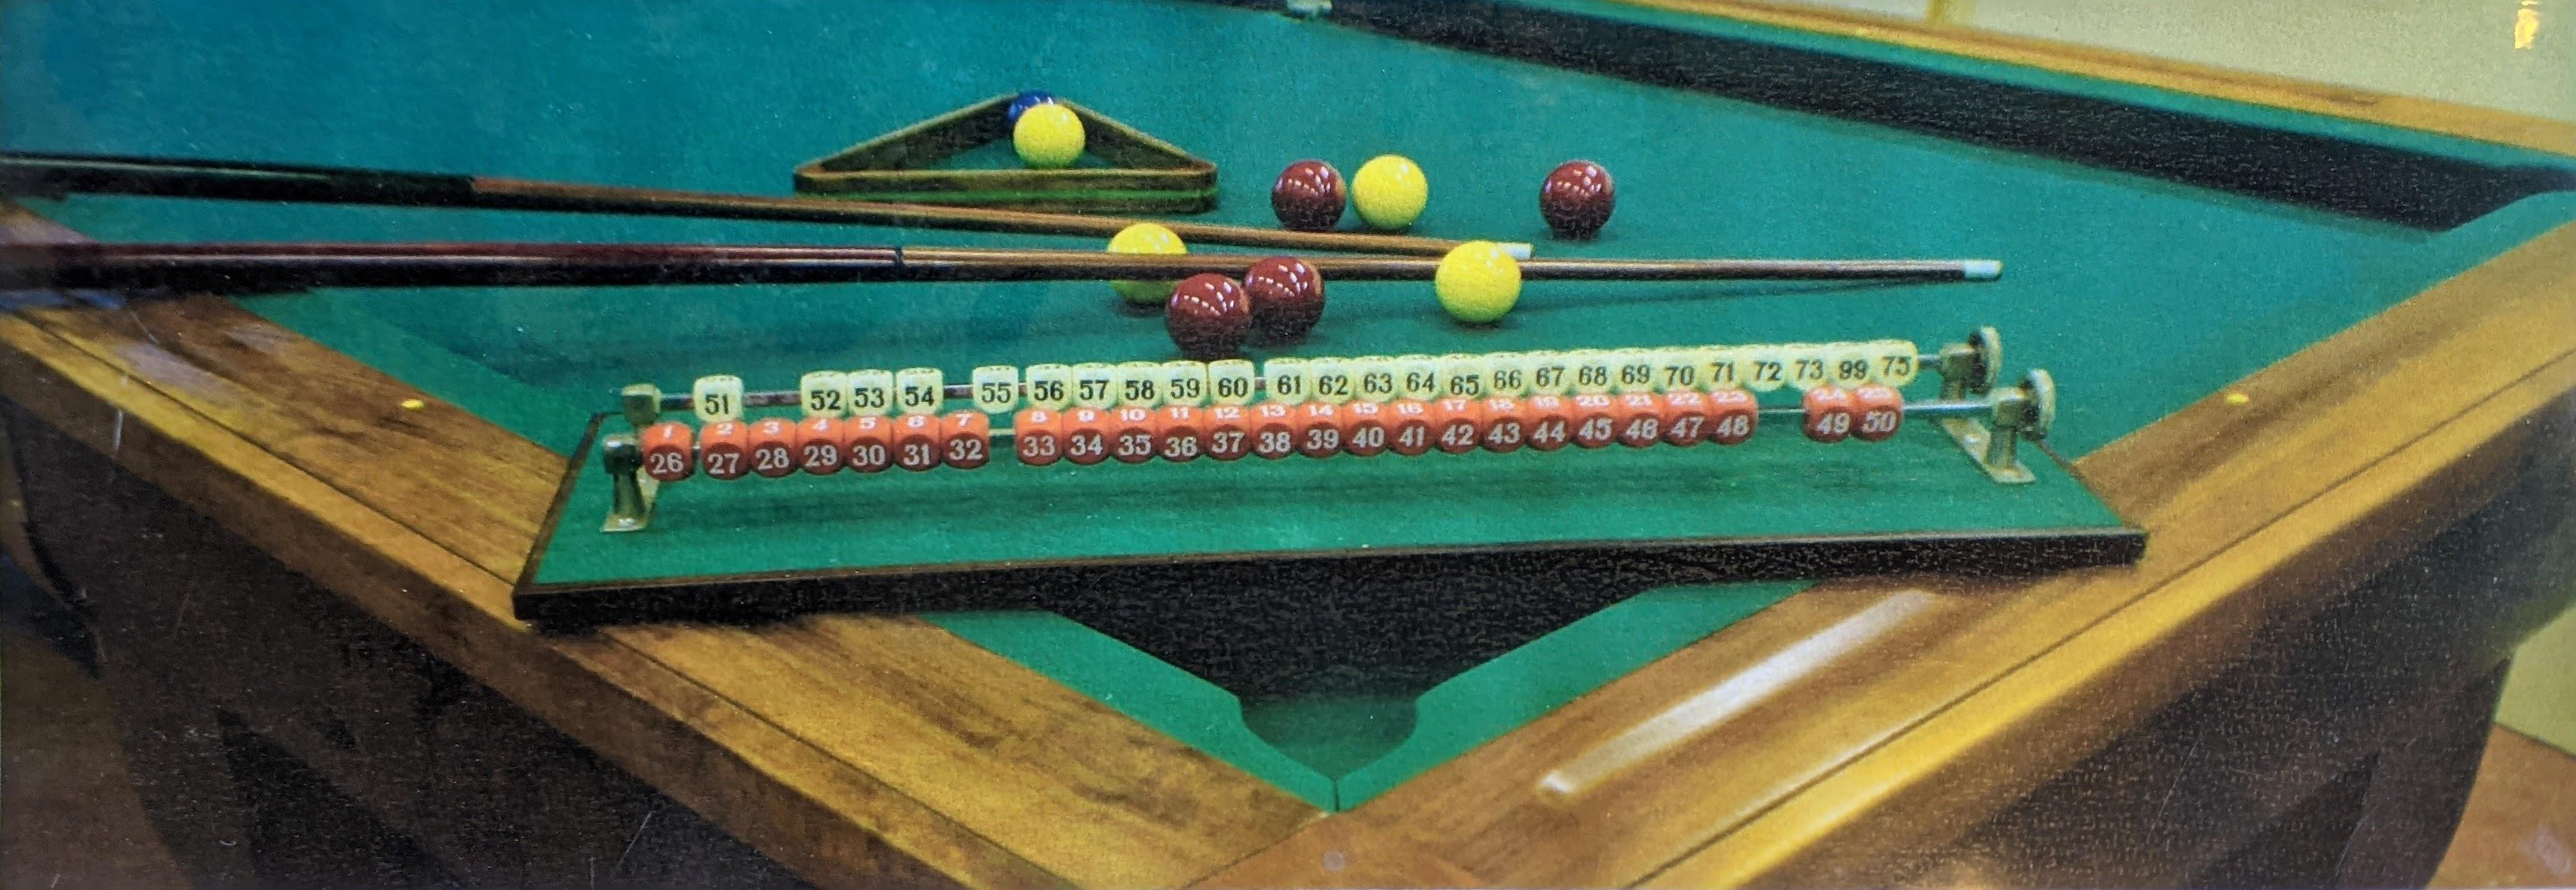 1920 pool table